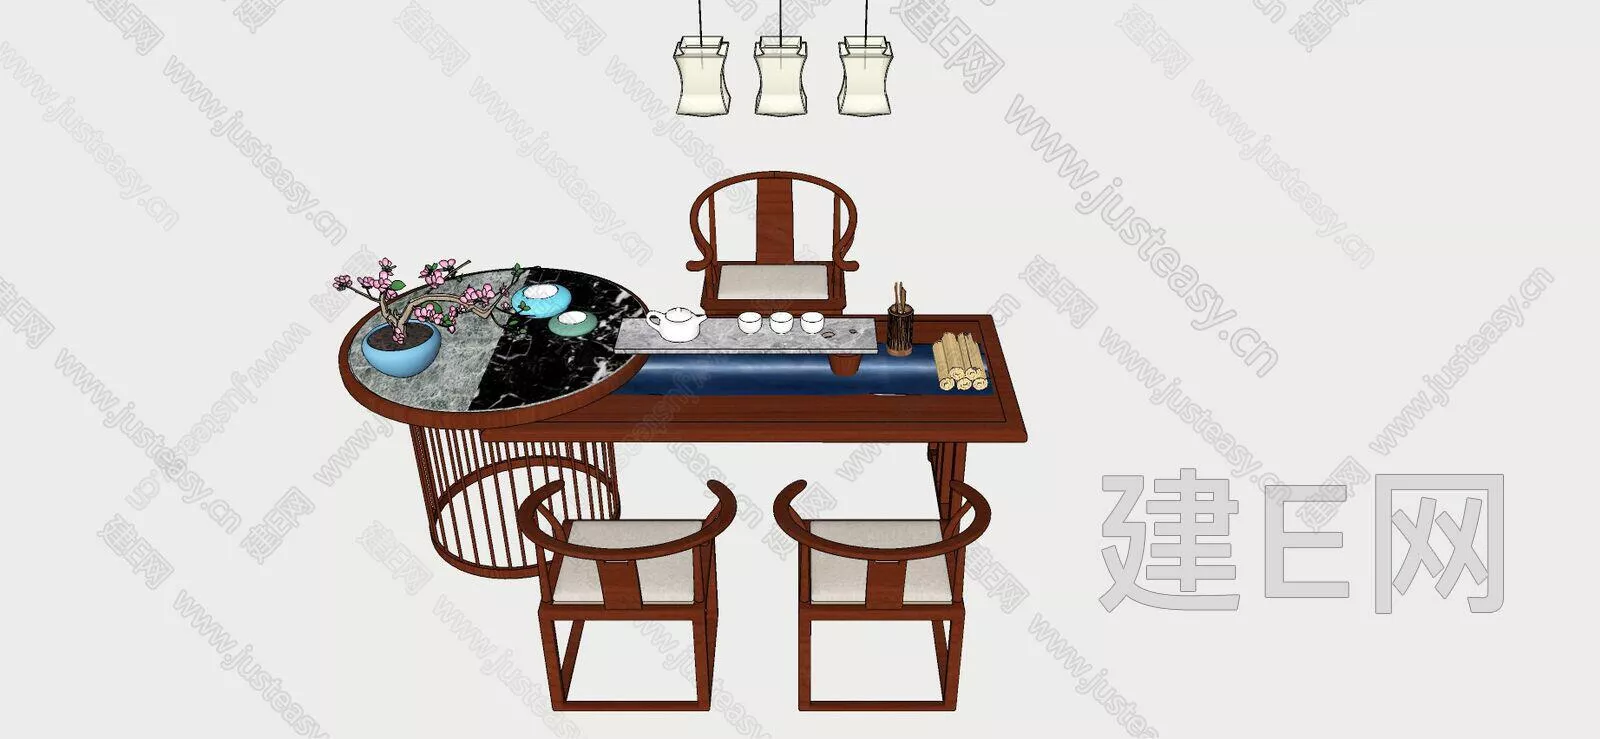 CHINESE TEA TABLE SET - SKETCHUP 3D MODEL - ENSCAPE - 110772731